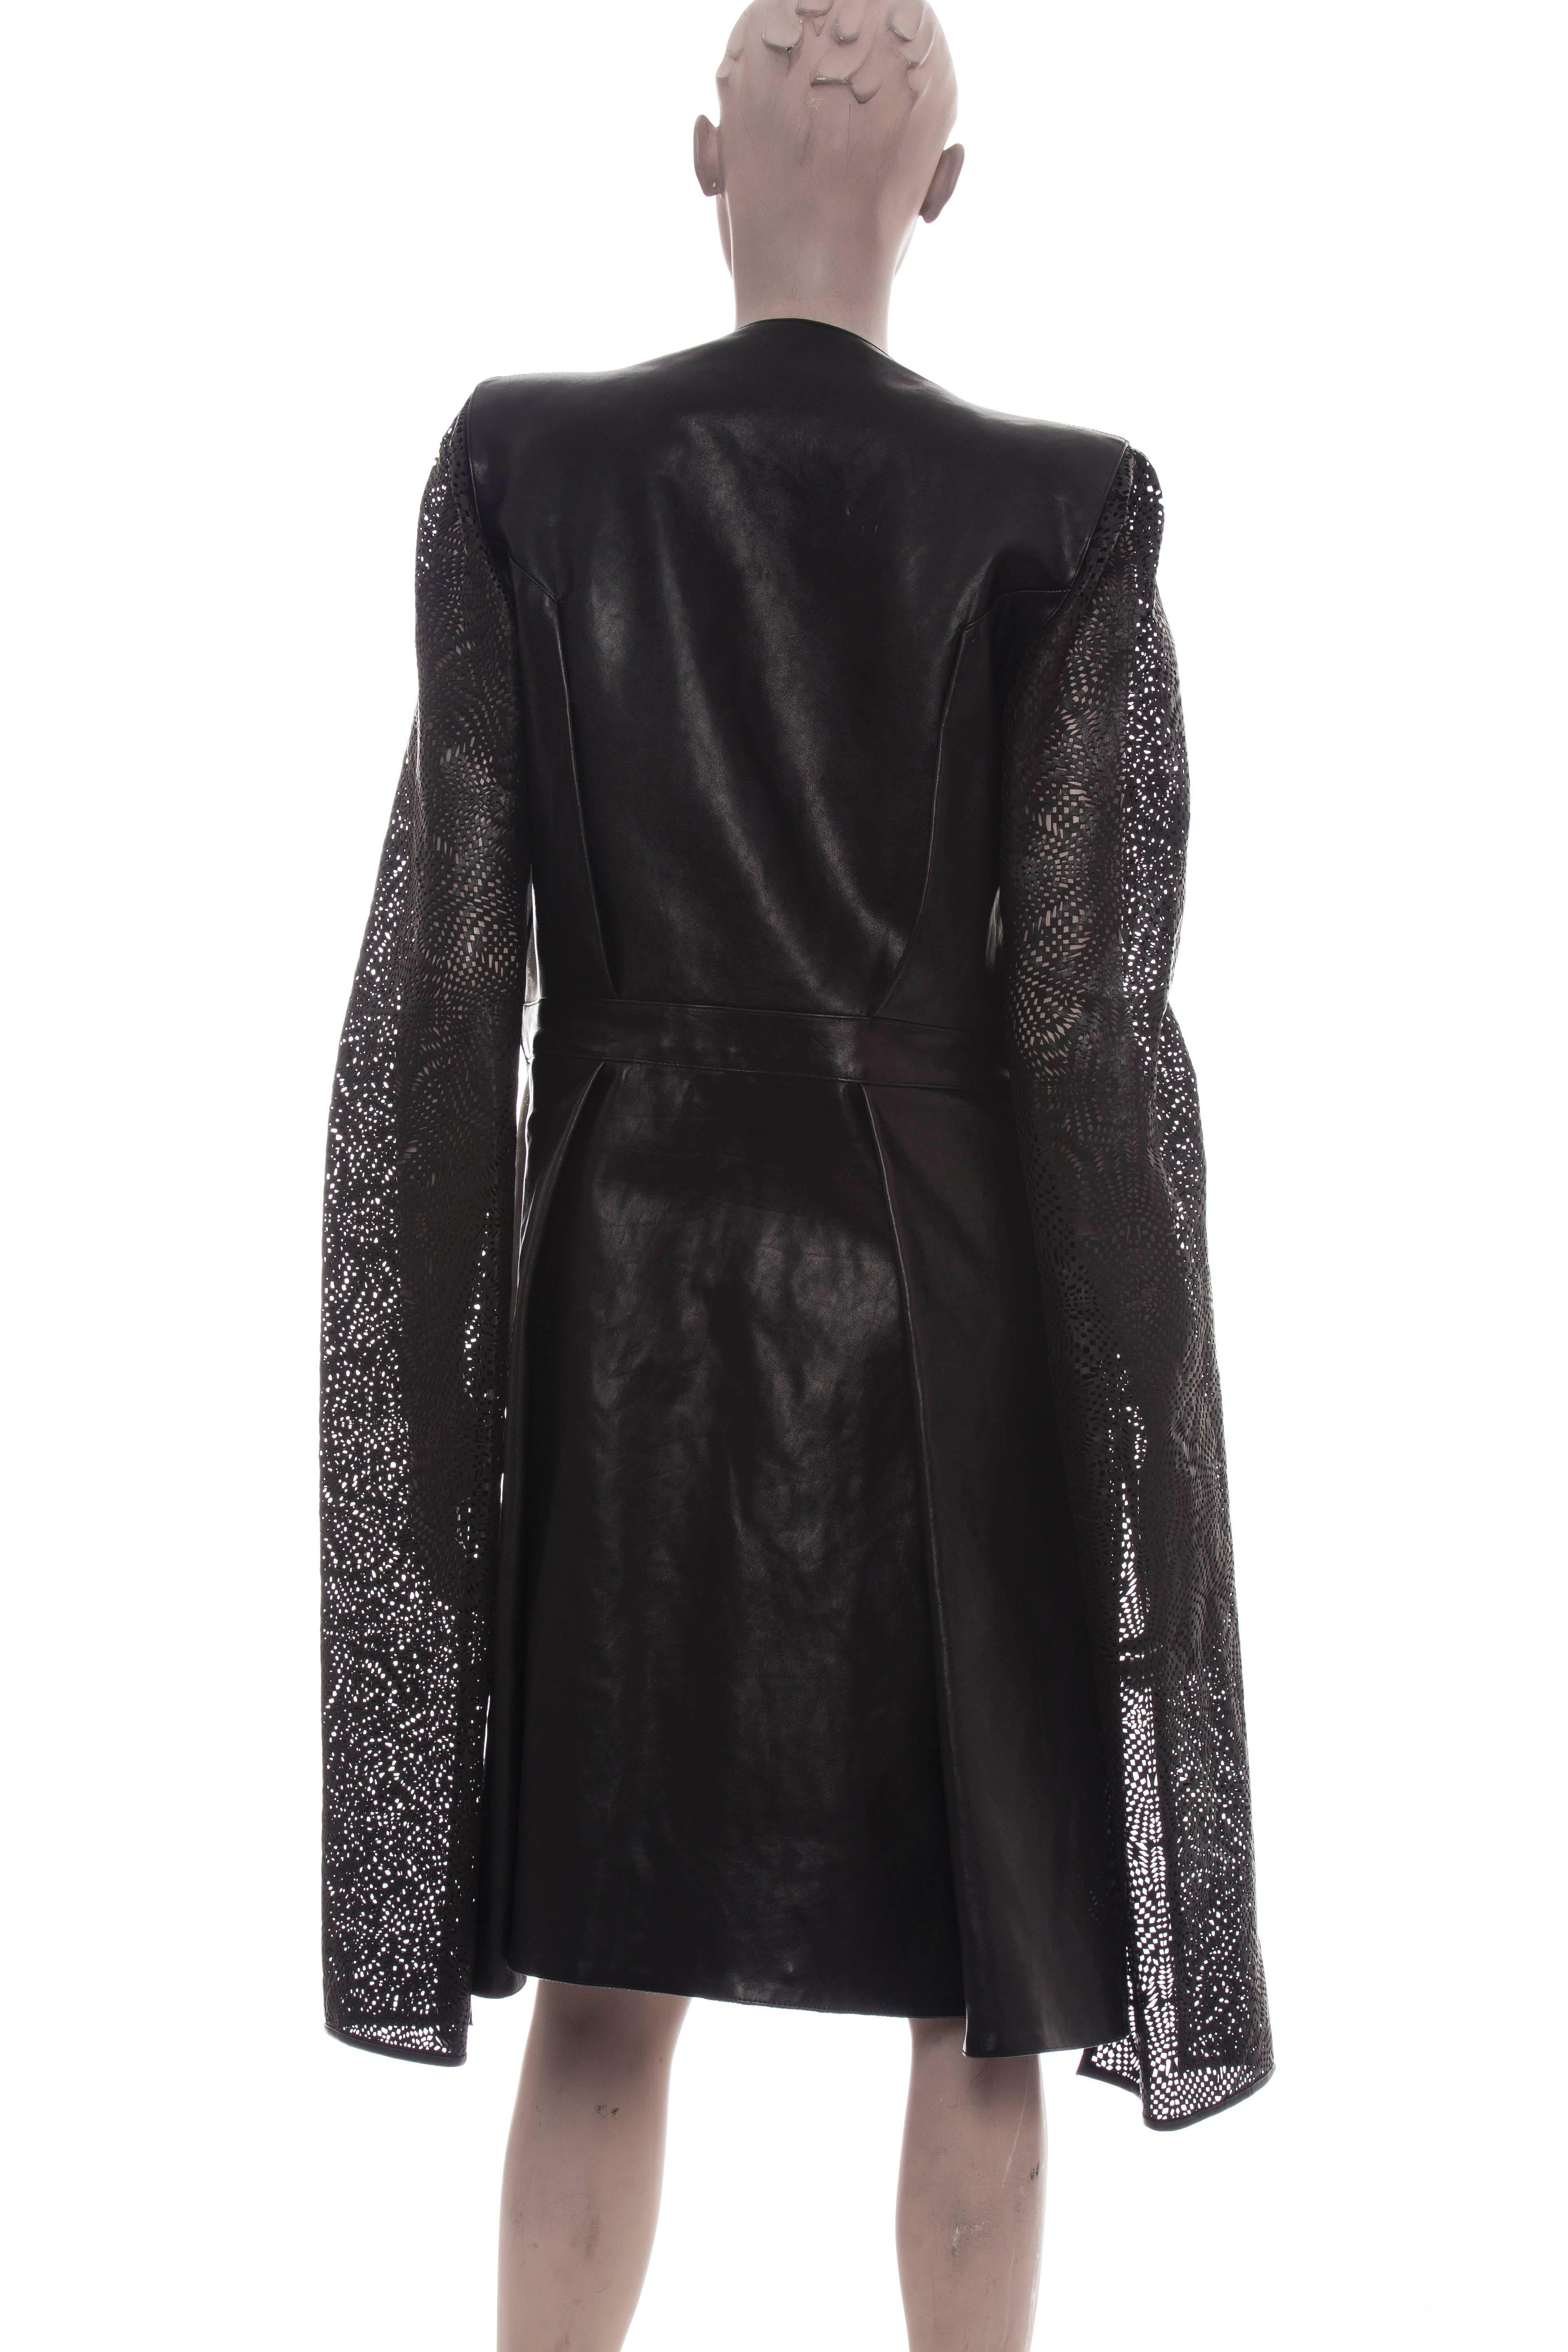 Women's Gareth Pugh Black Leather Coat With Laser Cut Sleeves, Spring - Summer 2013